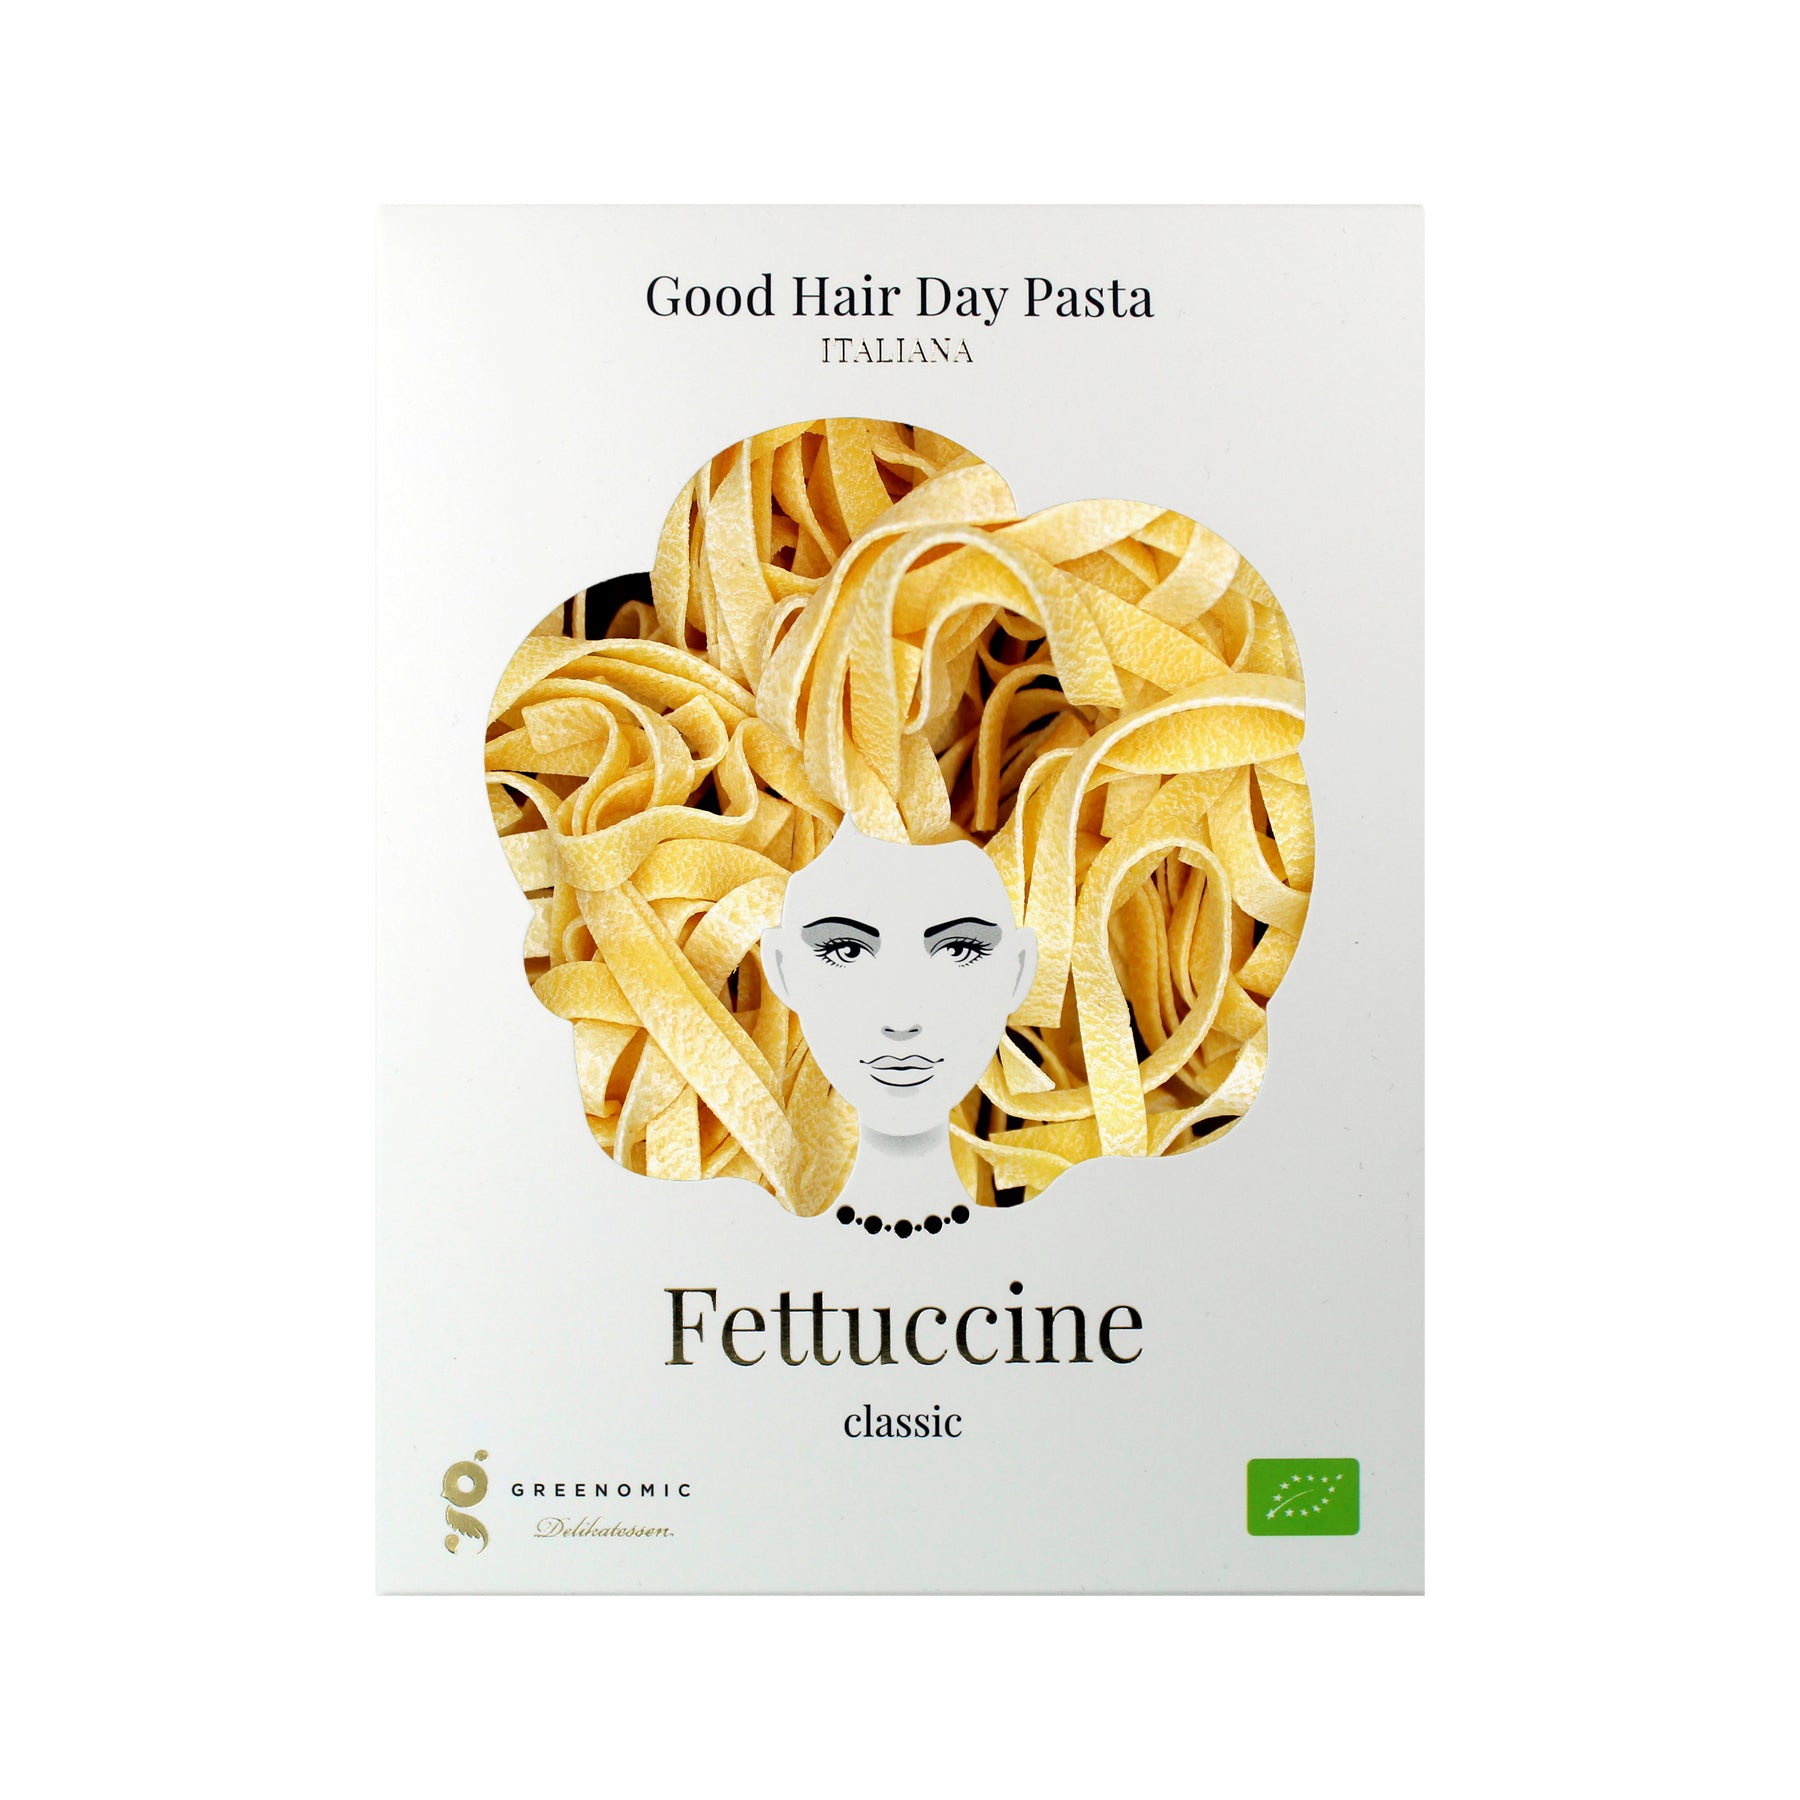 Fettuccine Classic BIO - Good Hair Day Pasta